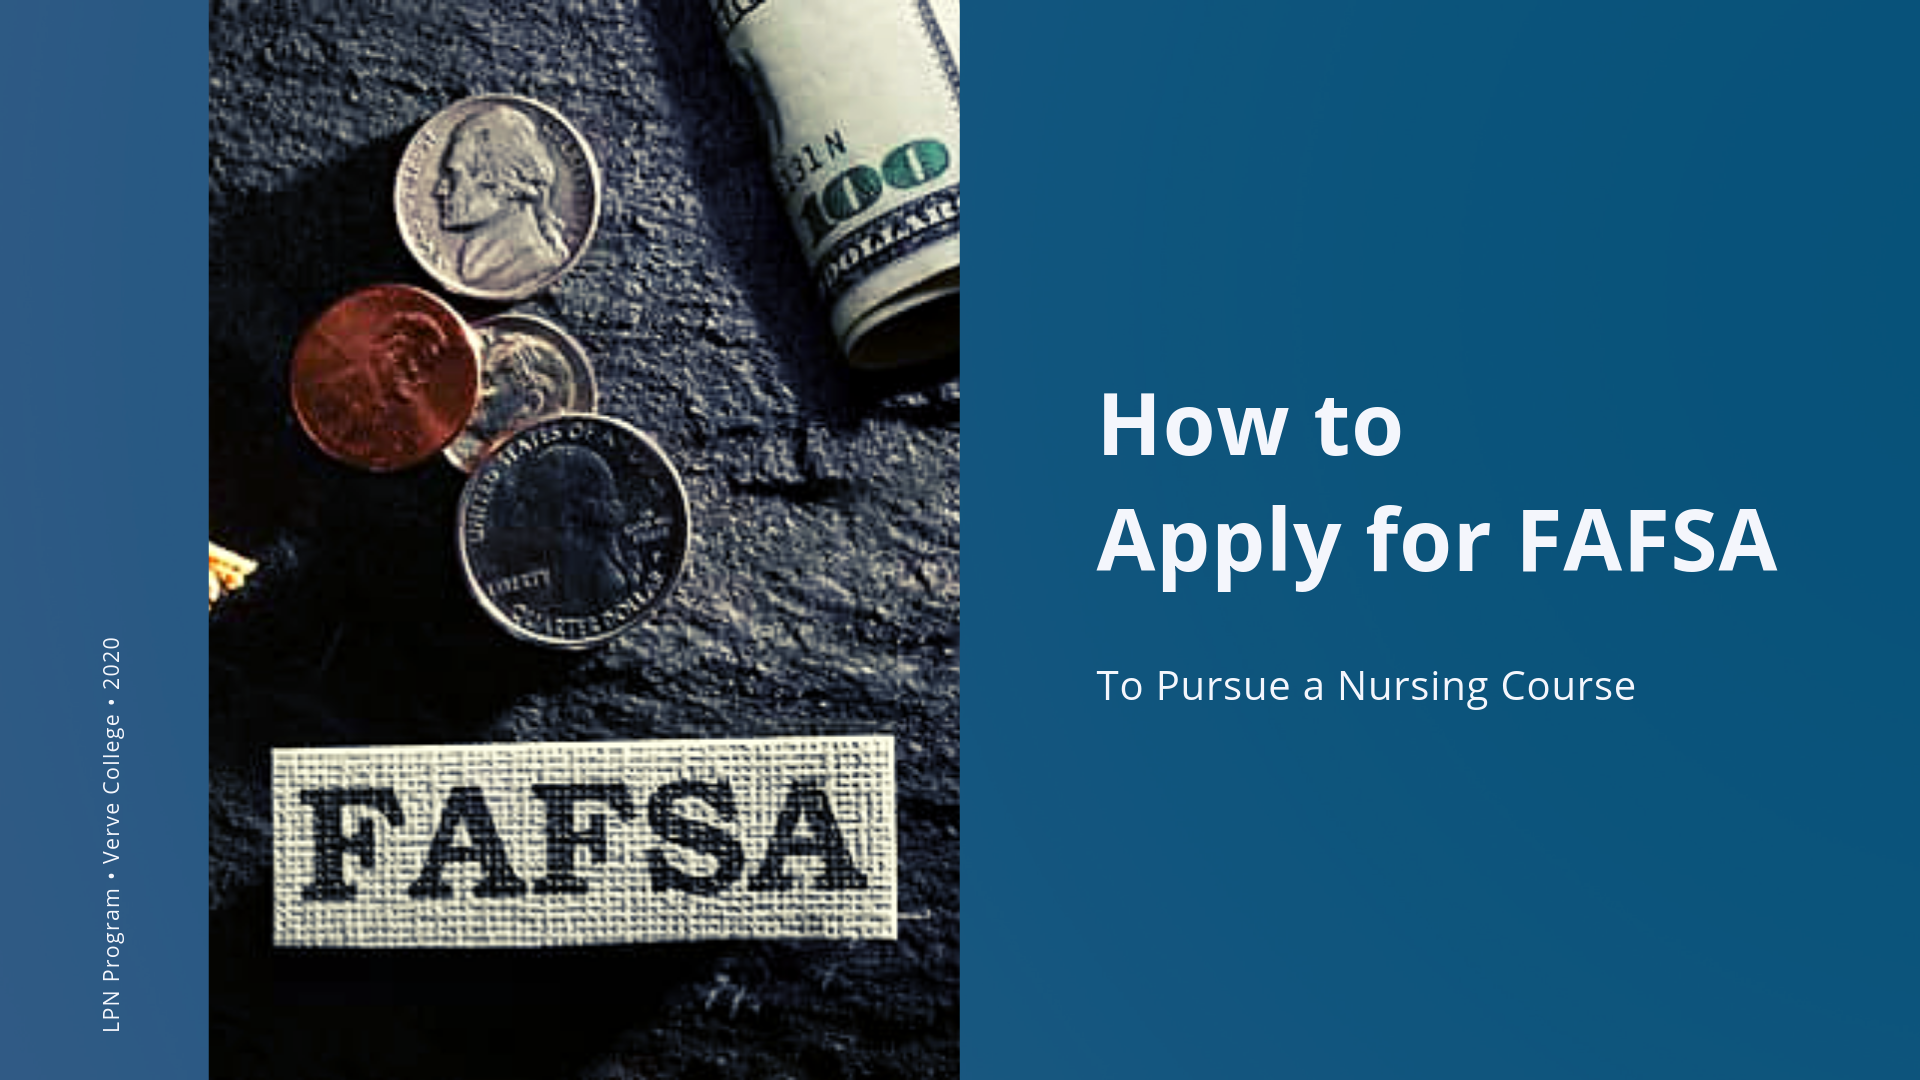 How to Apply for FAFSA To Pursue a Nursing Course